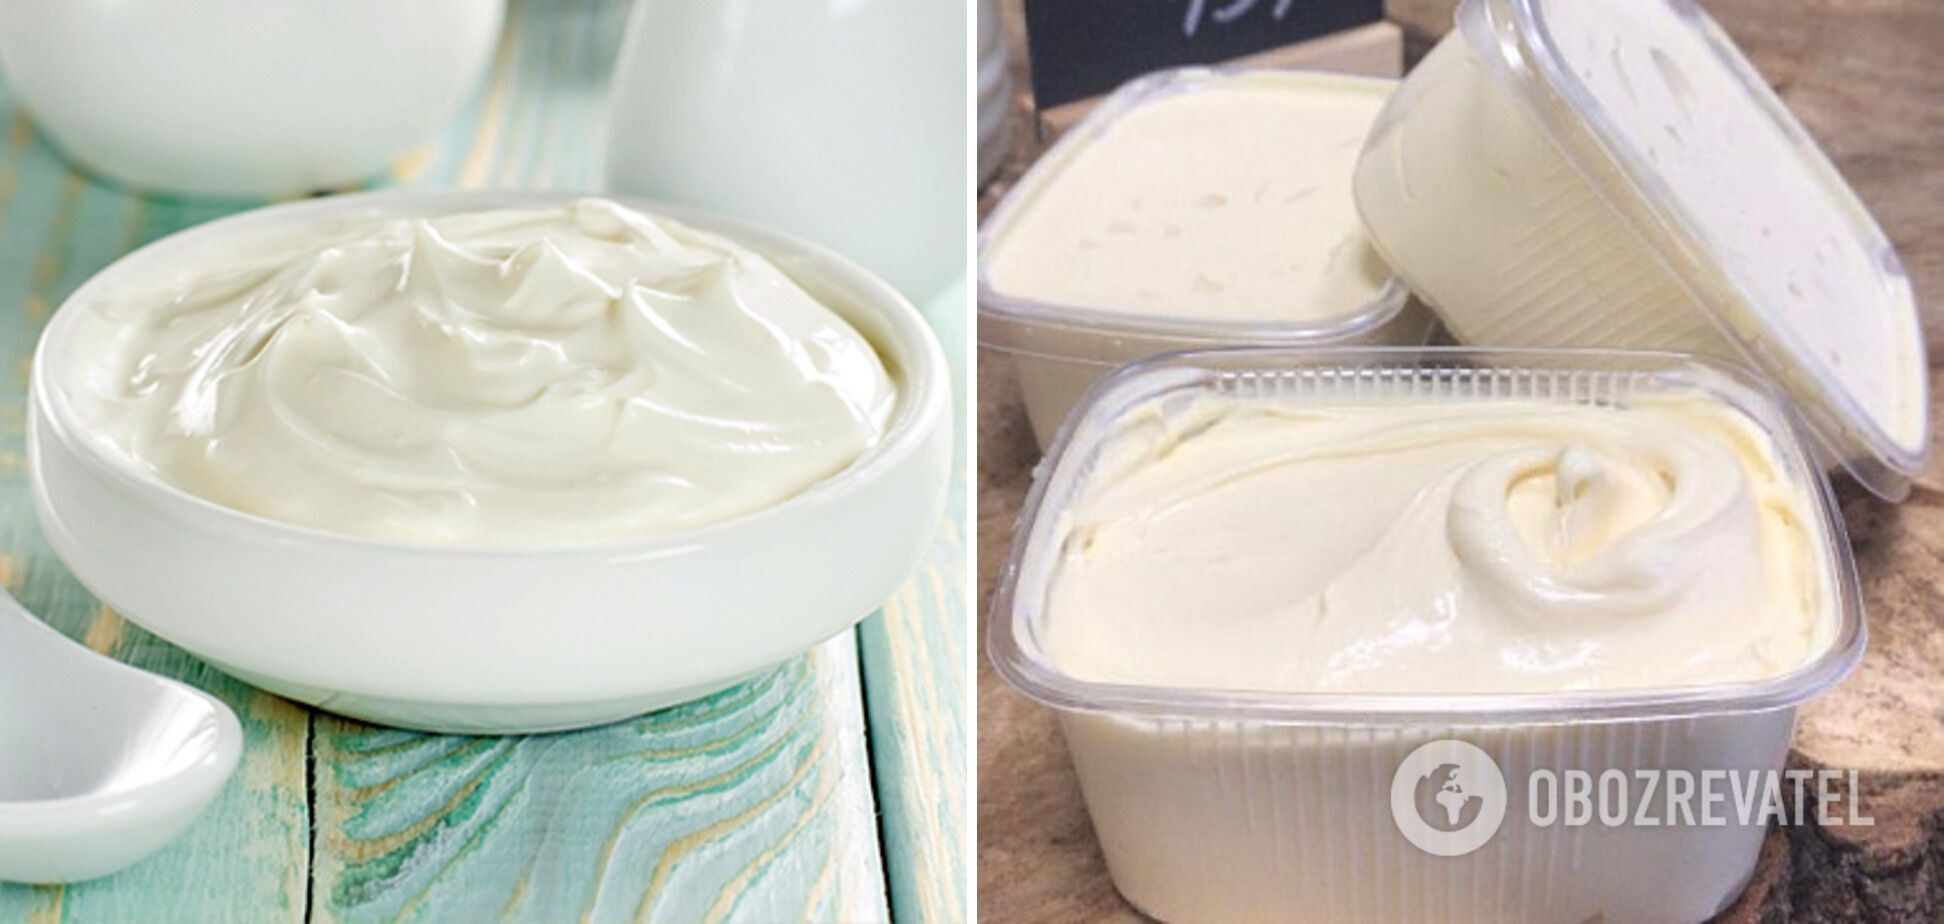 Sour cream for making a spread